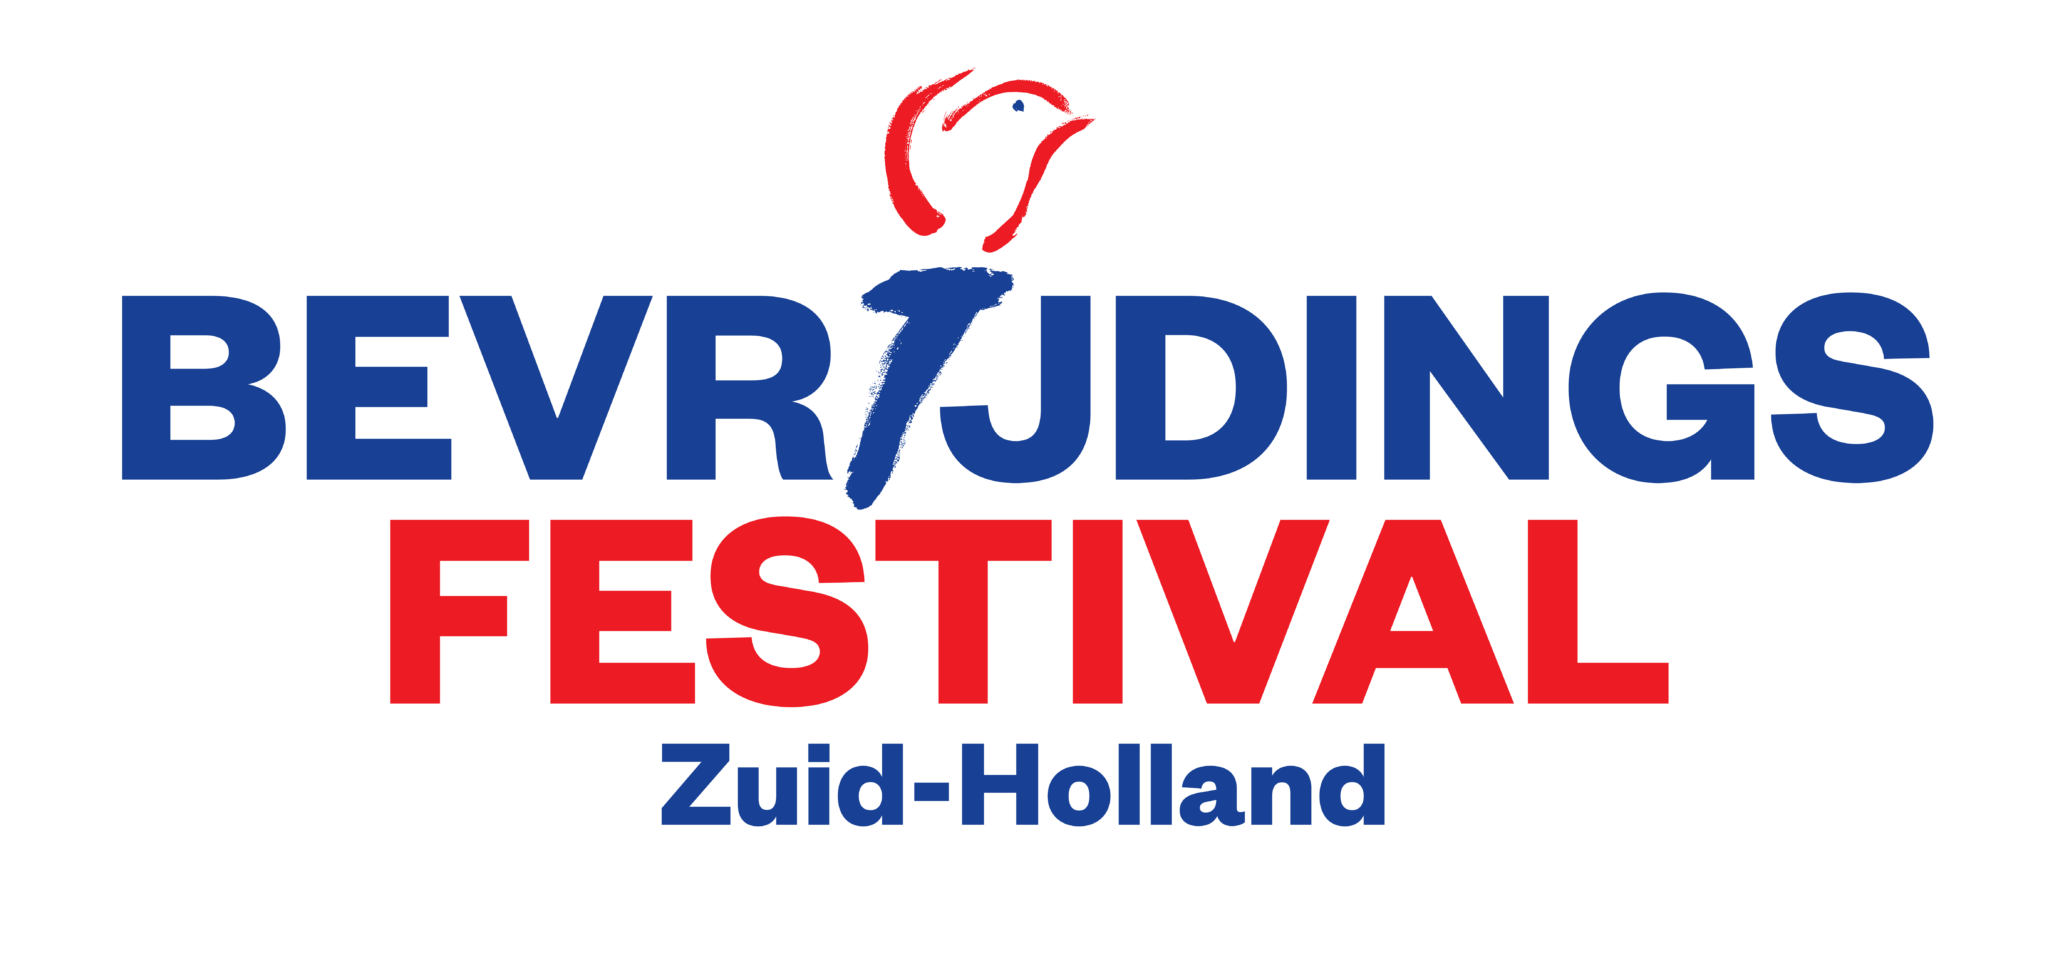 Bevrijdingsfestival Zuid Holland 2017